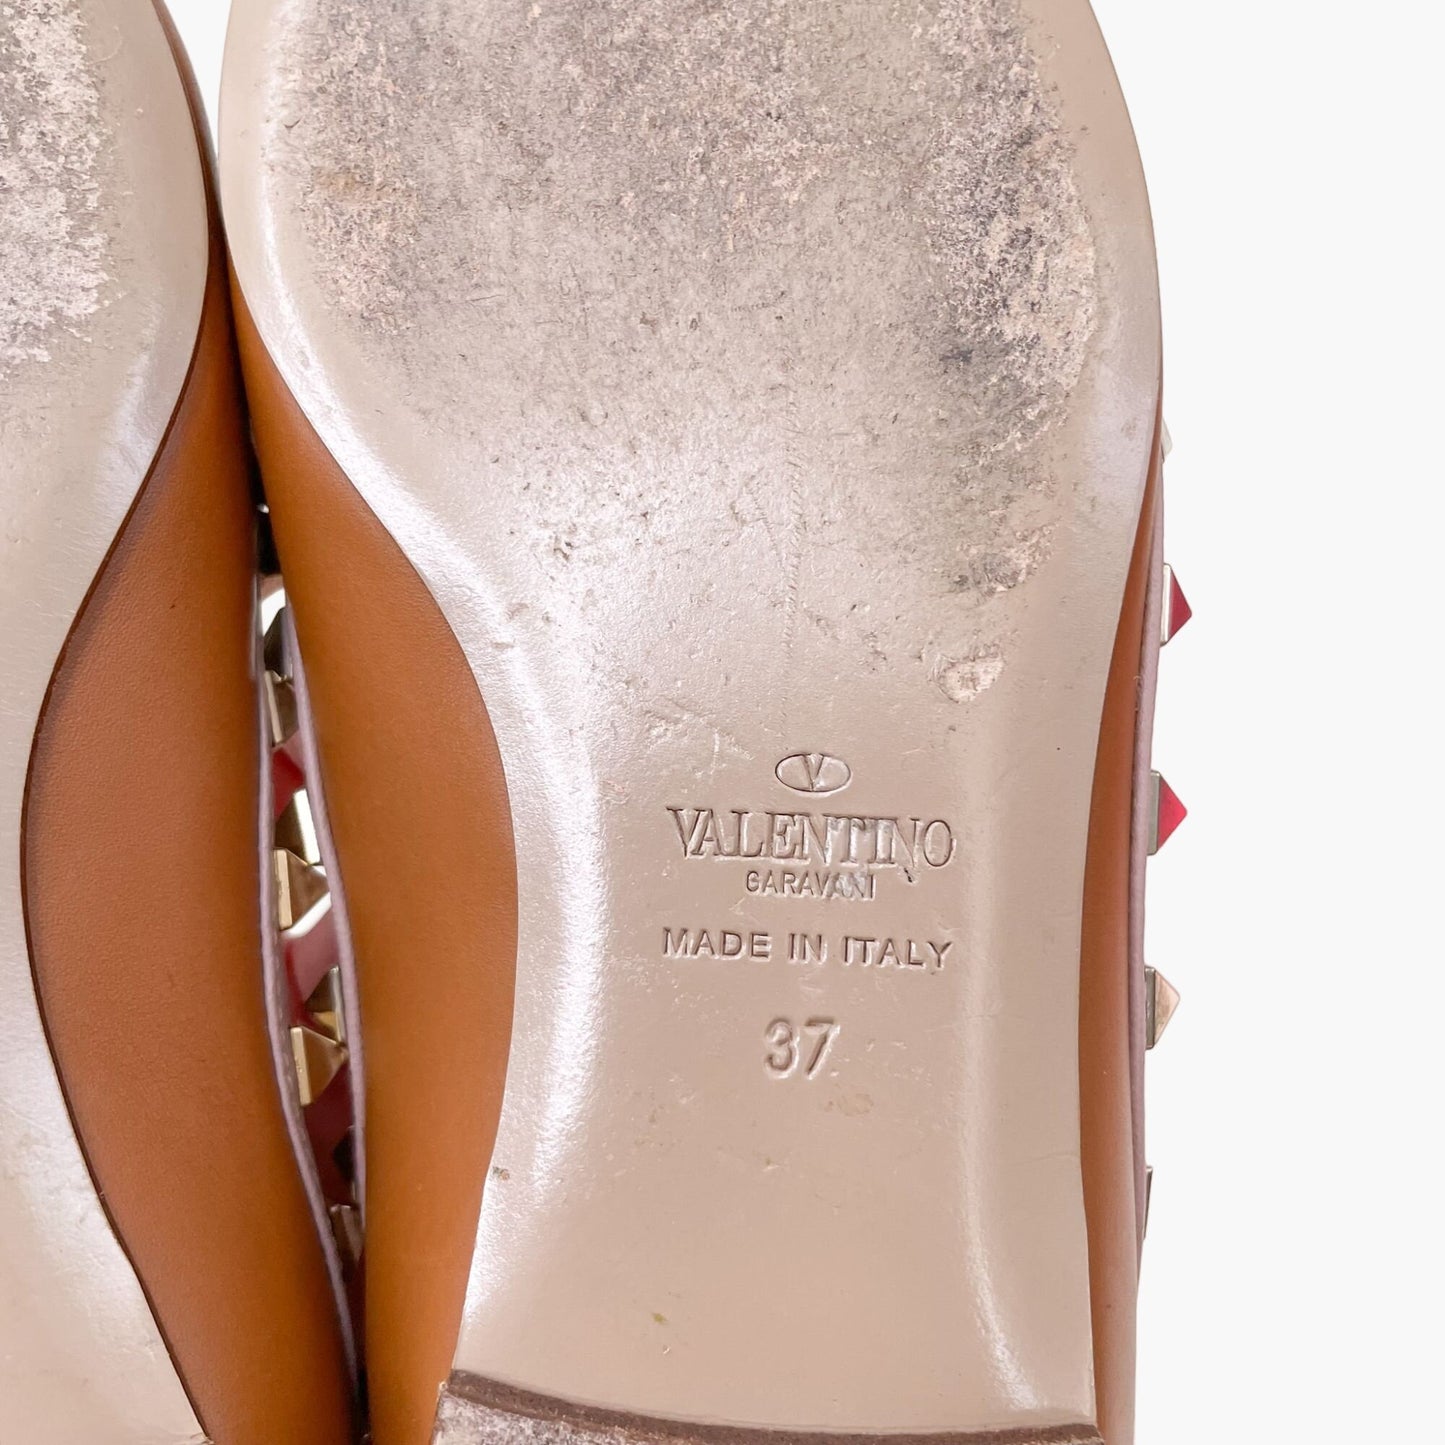 Valentino Garavani Rockstud Ballet Flats in Caramel Size 37